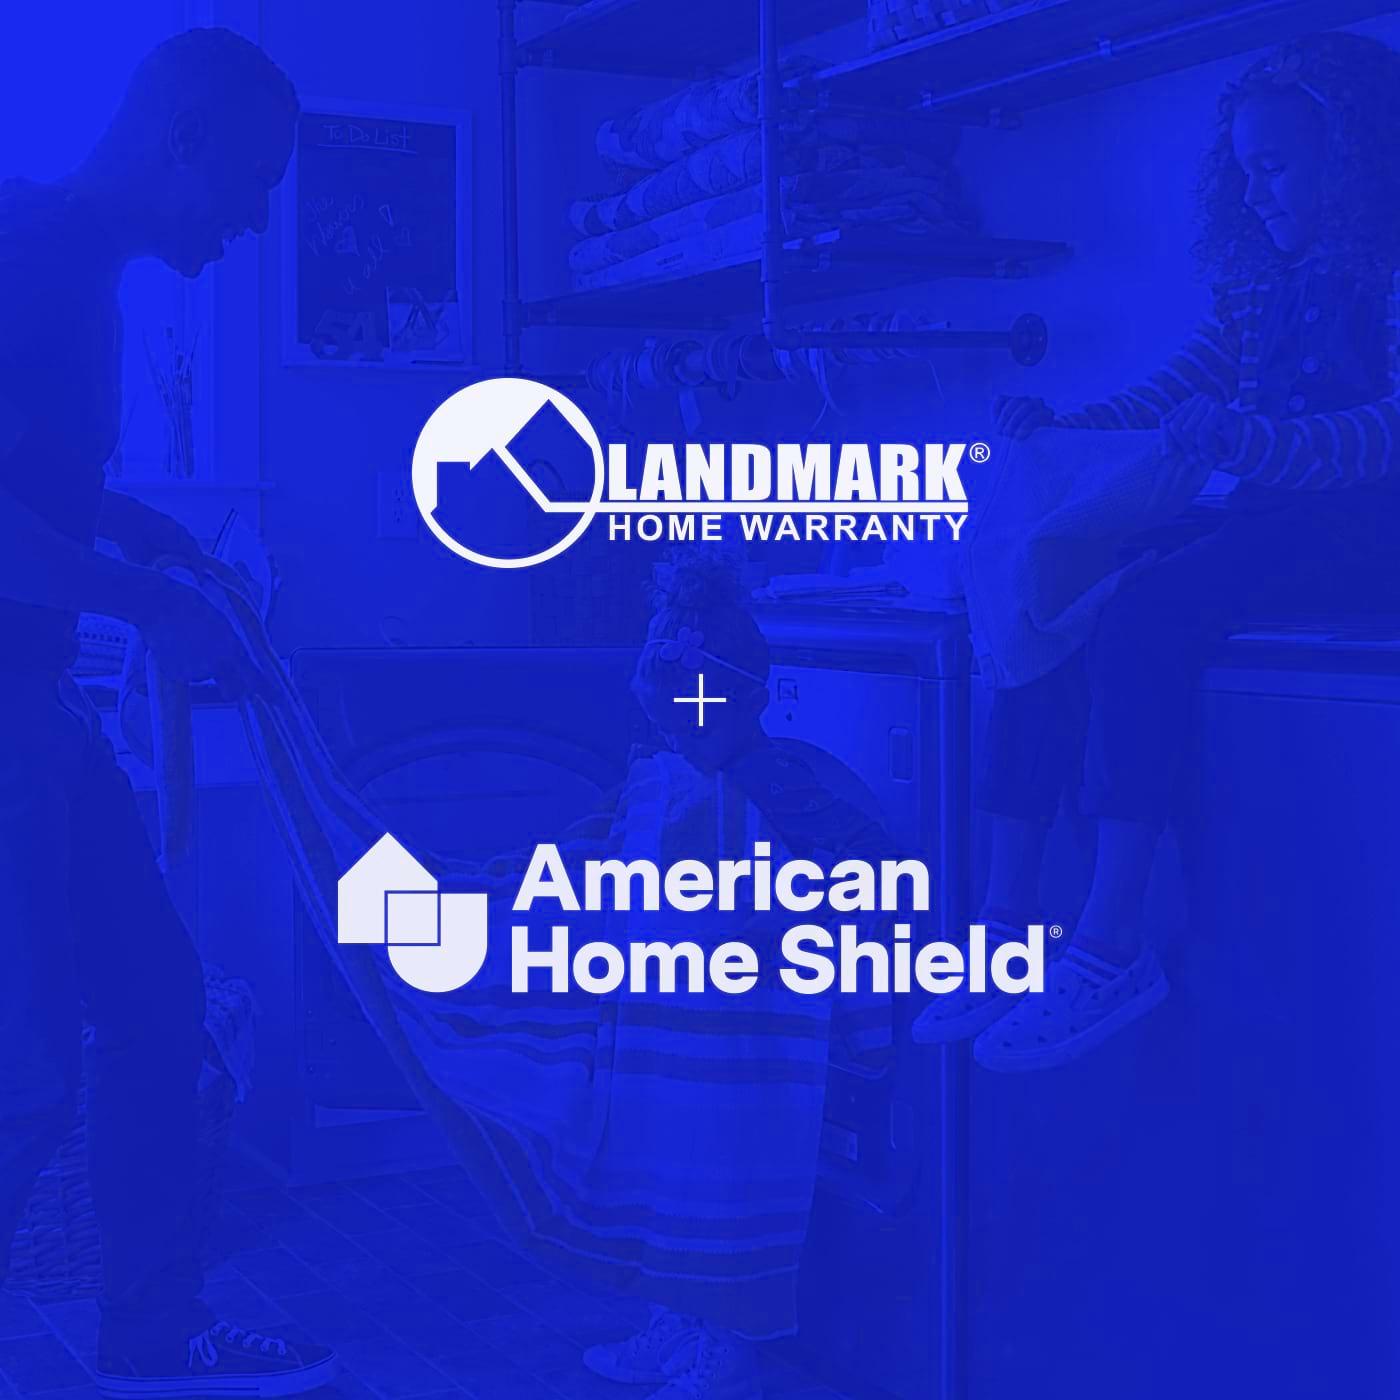 Landmark + American Home Shield